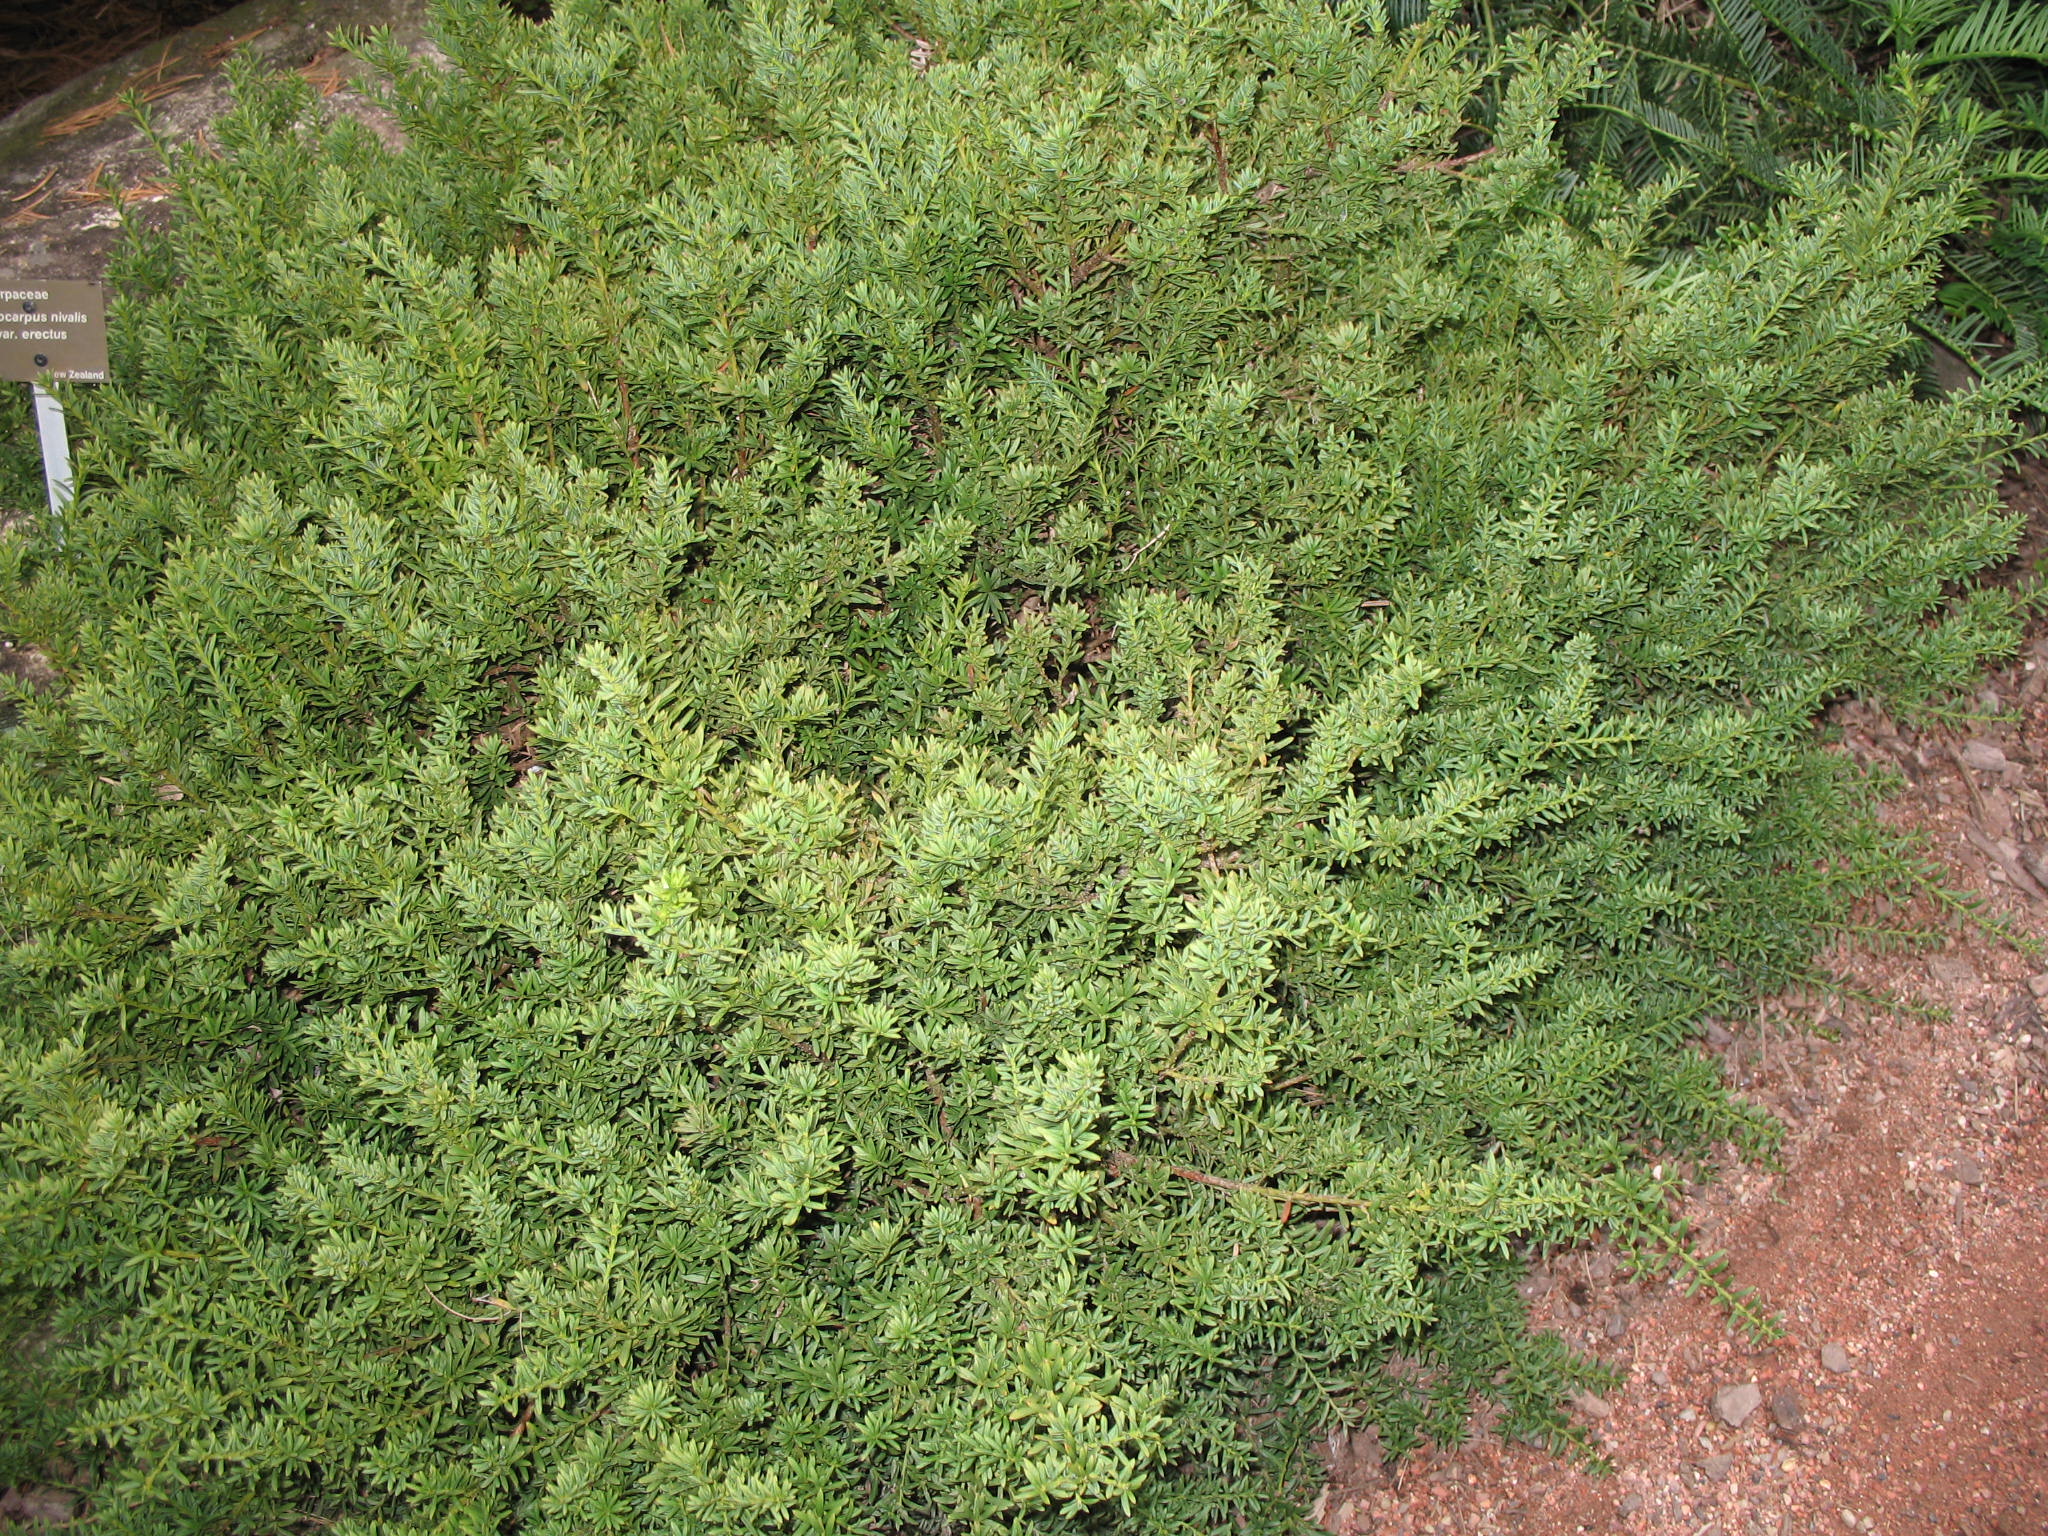 Podocarpus nivalis var. erectus / Podocarpus nivalis var. erectus